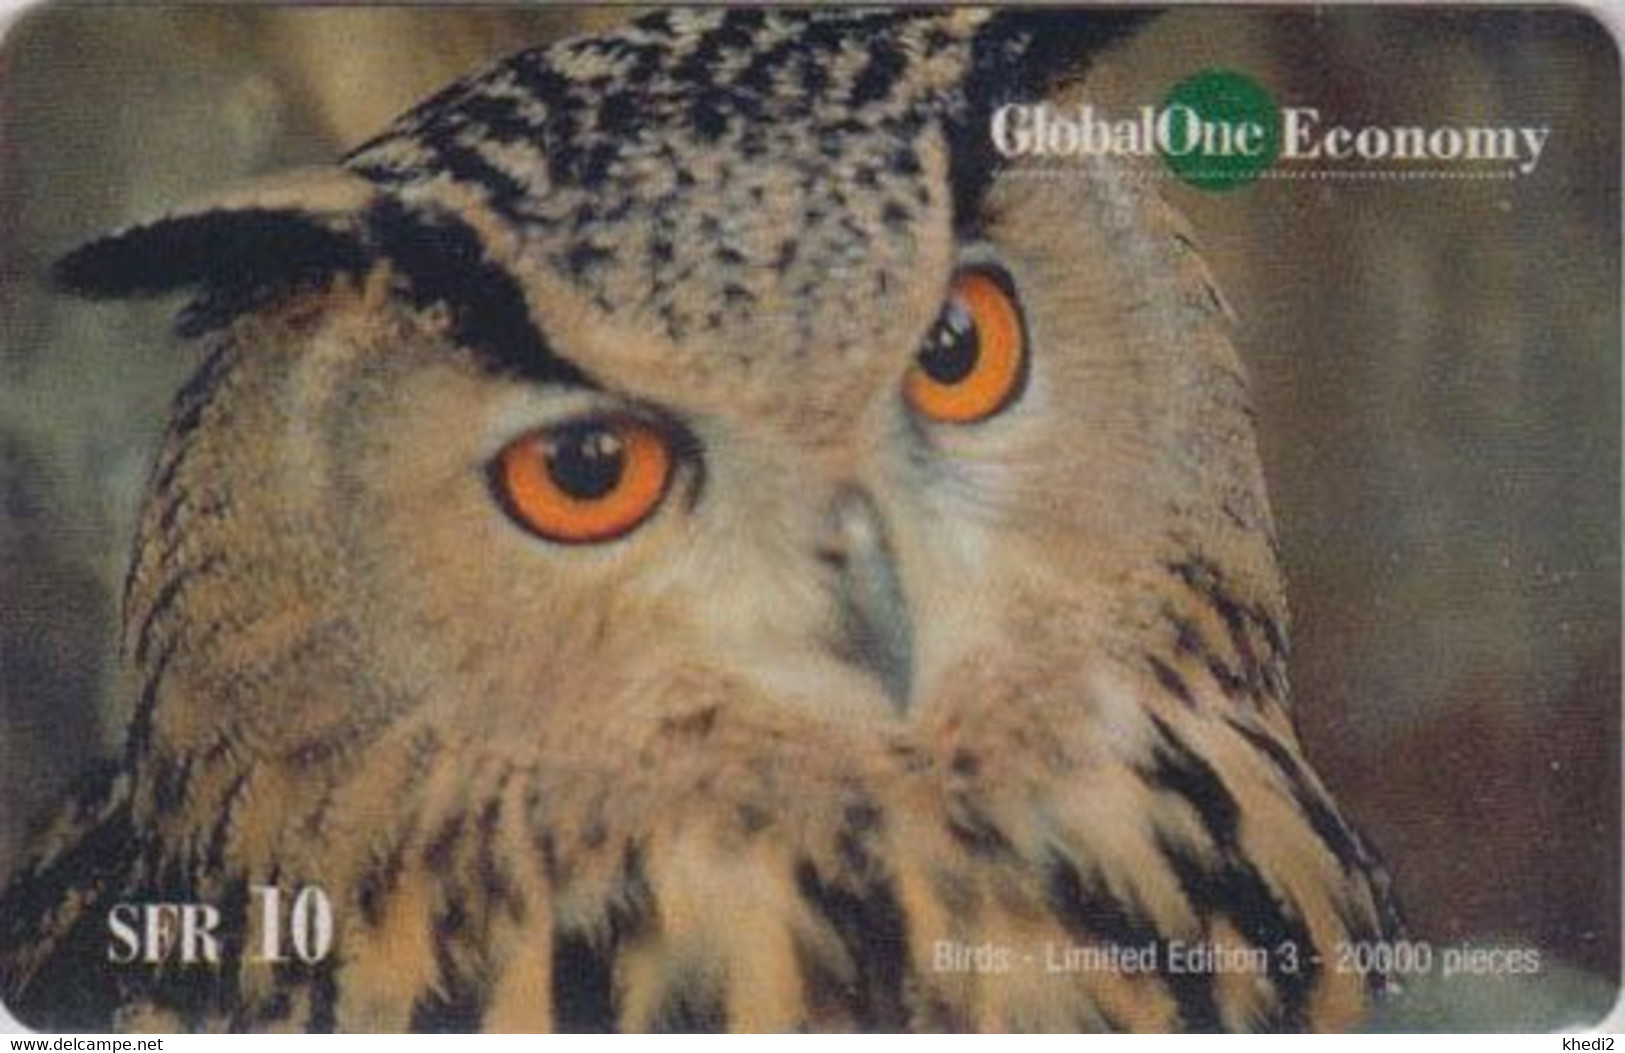 Télécarte Prépayée SUISSE GLOBAL ONE - ANIMAL - OISEAU - HIBOU - OWL BIRD - Switzerland Prepaid Phonecard - 5149 - Eulenvögel